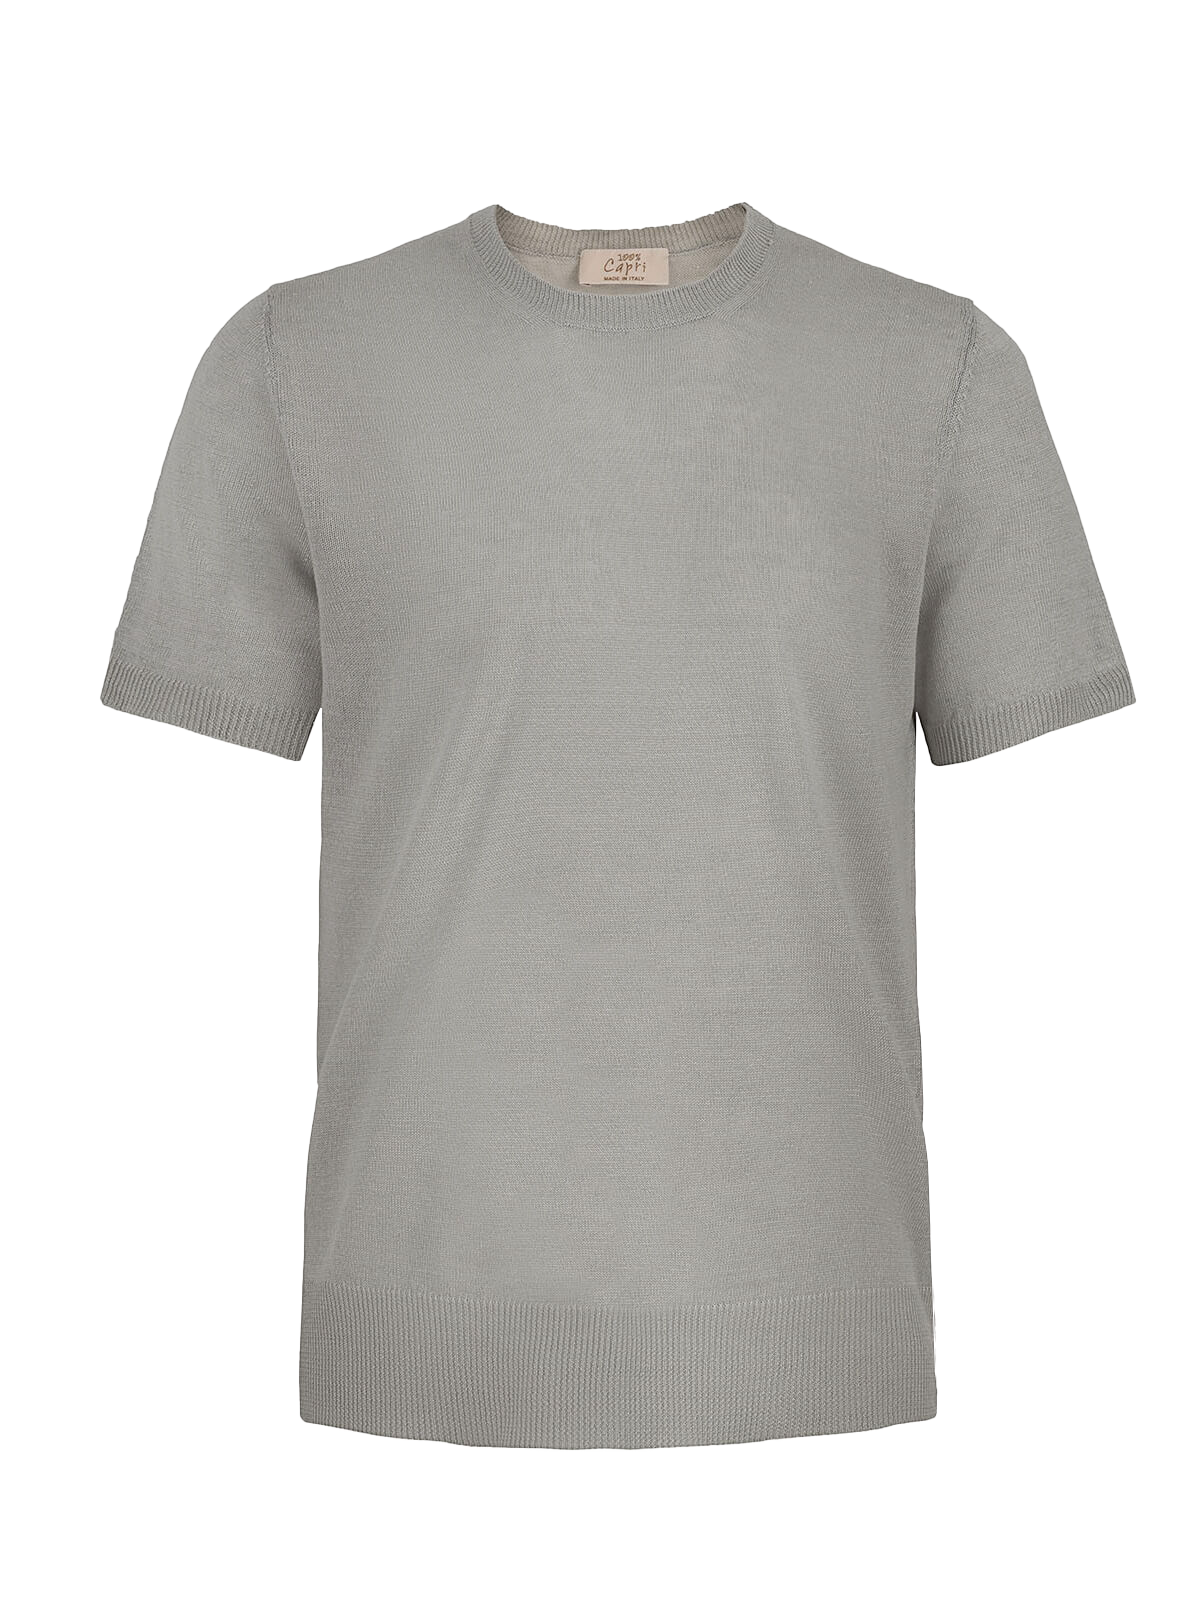 T-Shirt M/C 100% Capri light grey linen t-shirt front